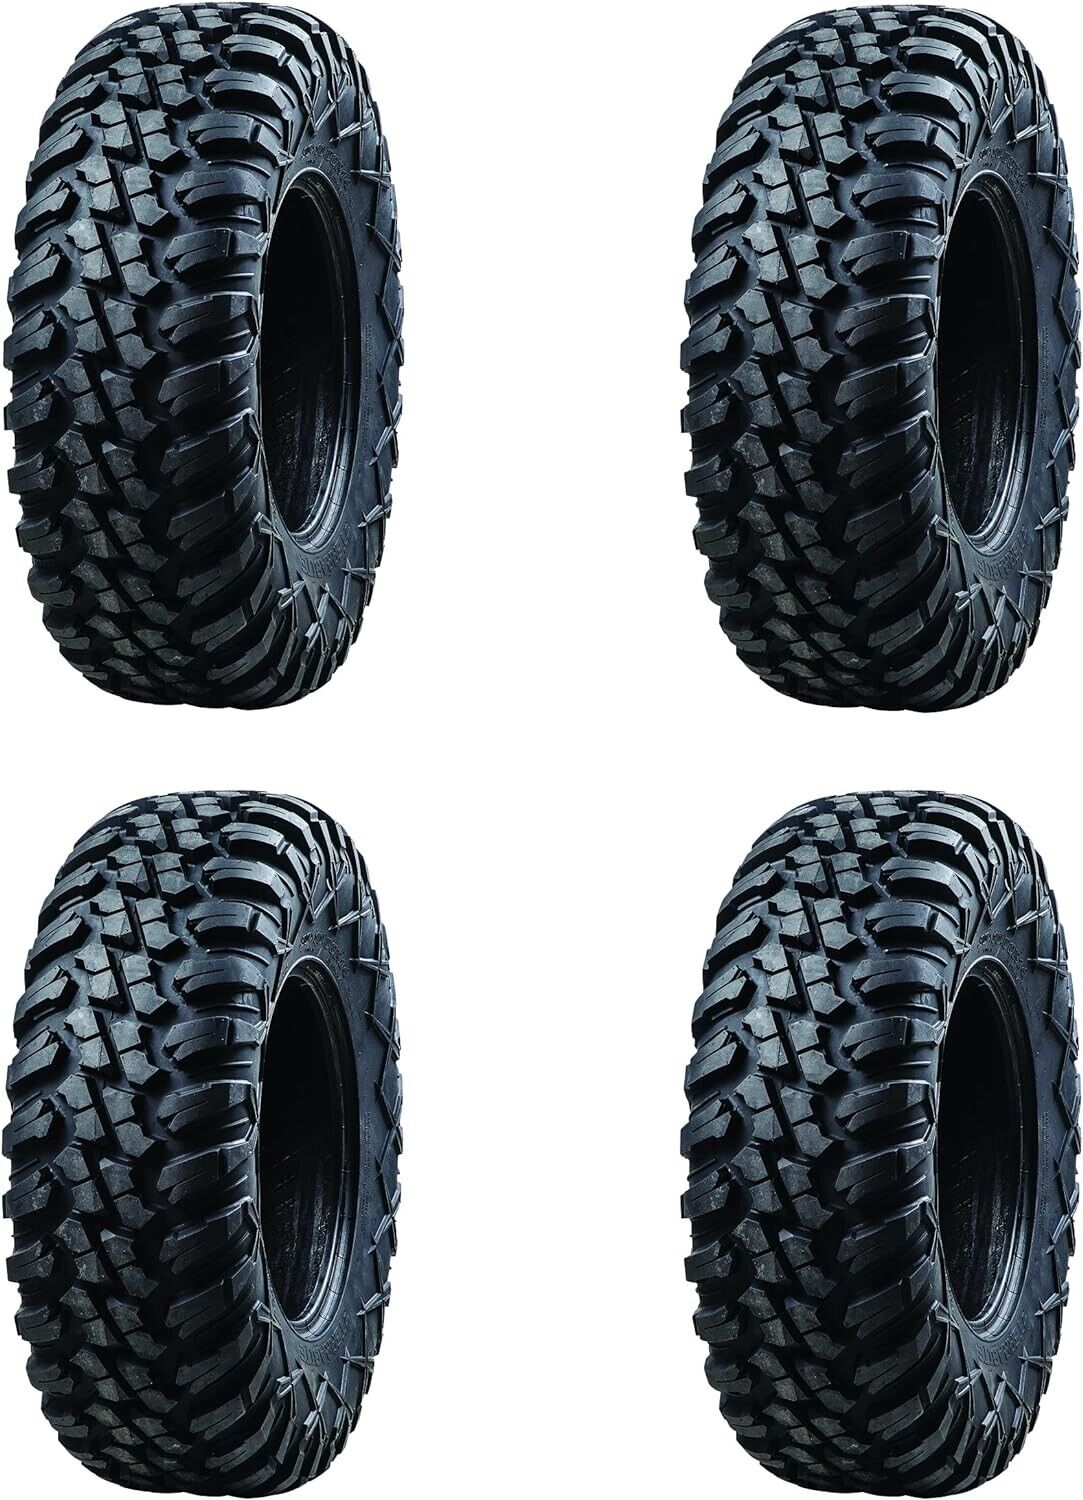 Tusk Terrabite® Radial Front & Rear Tire Set 32x10-14